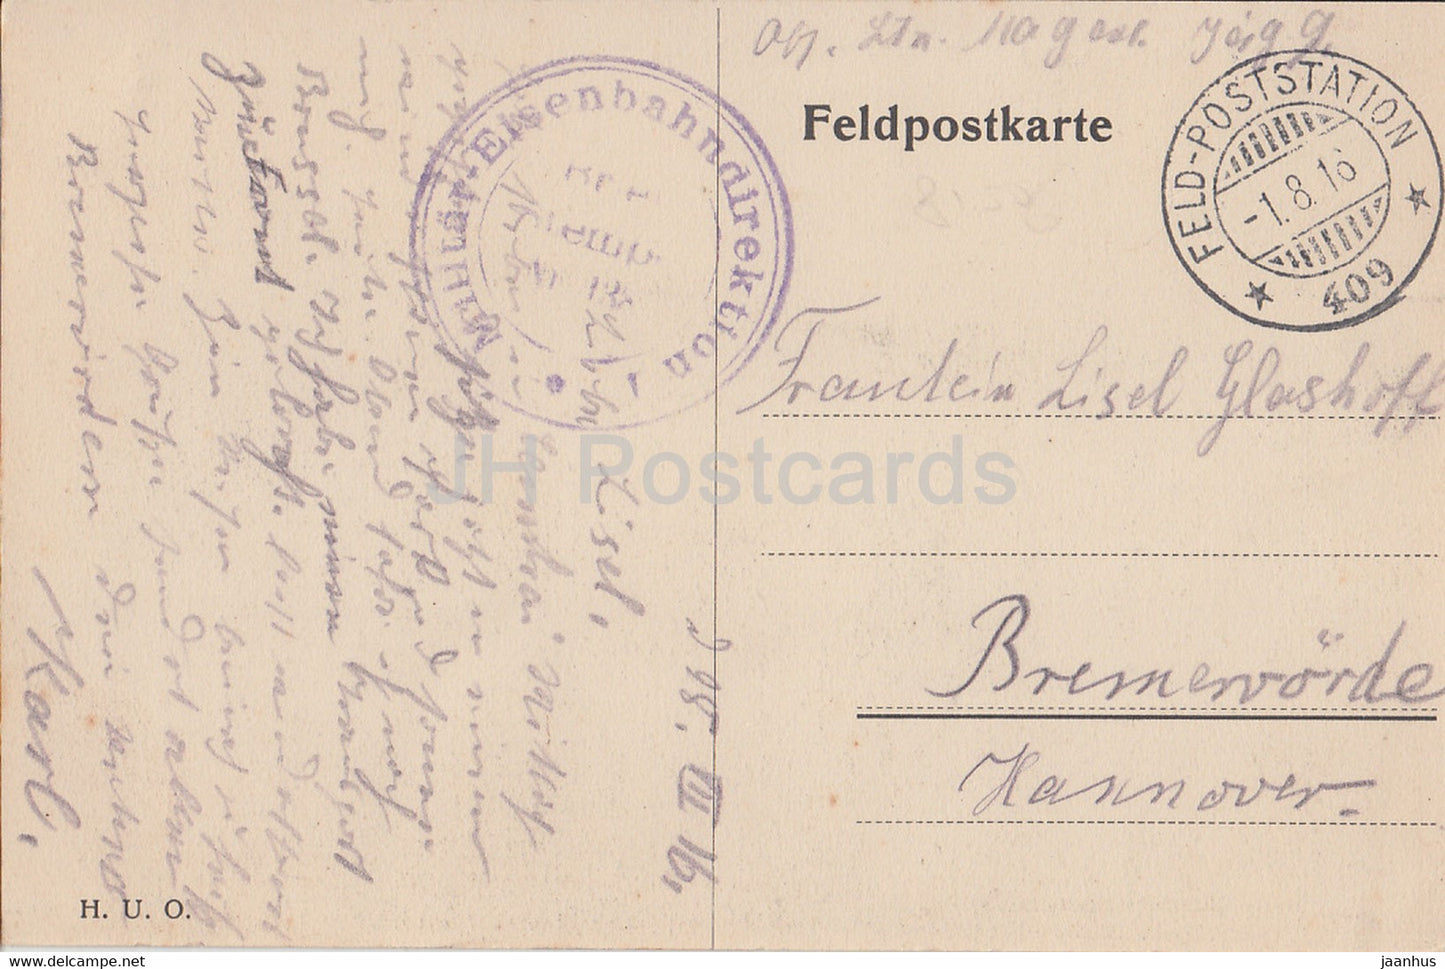 Cambrai - Pariser Tor mit Notre Dame Turm - old postcard - Feldpost - 1916 - France - used